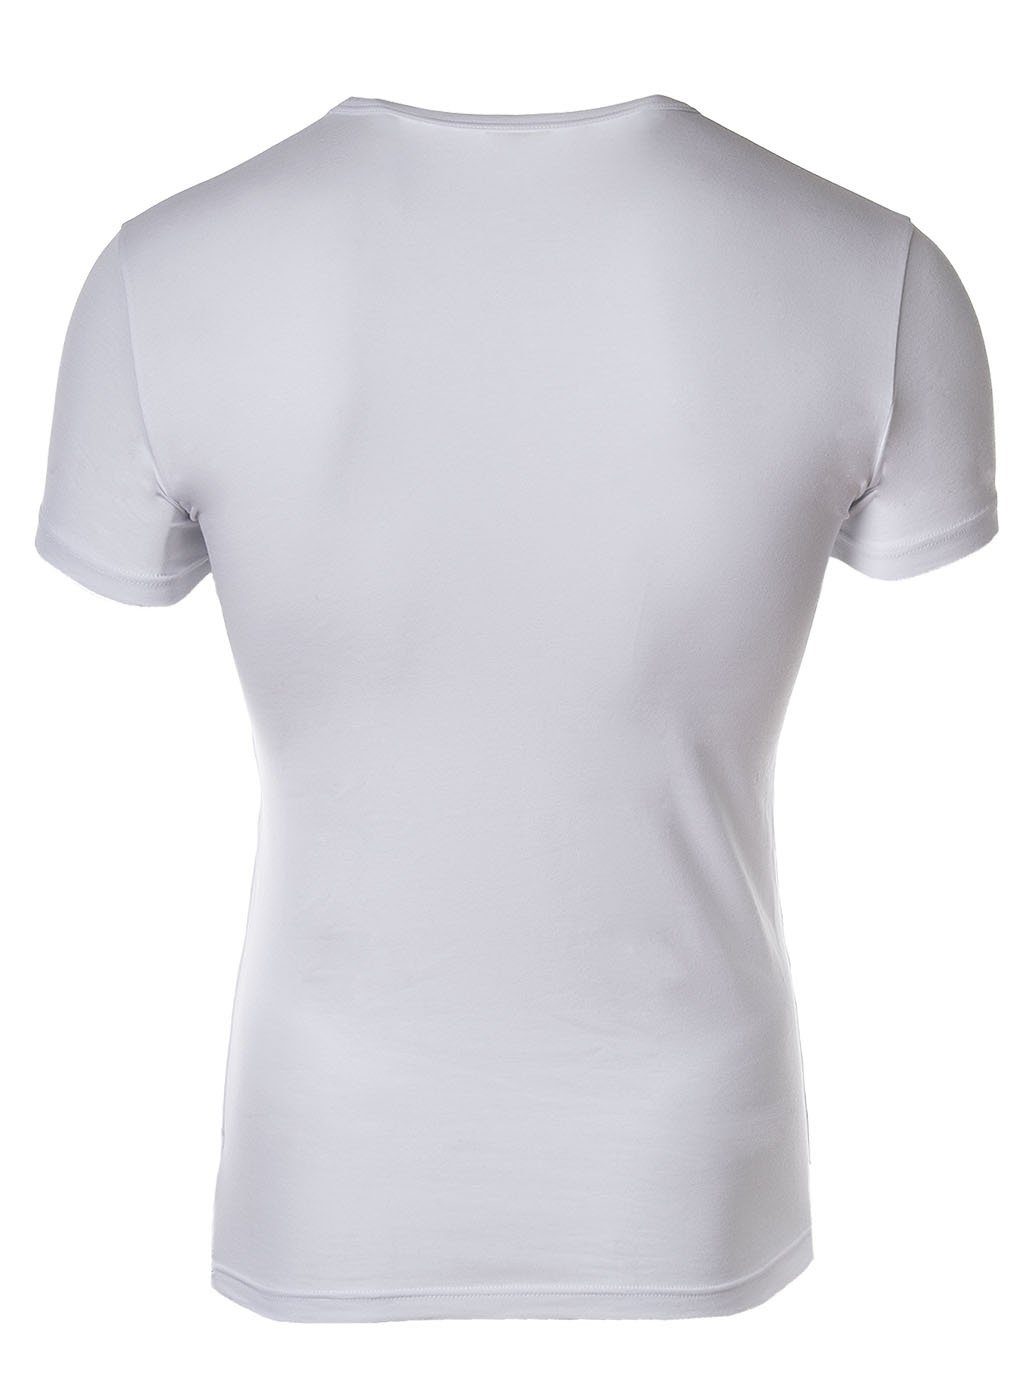 2er T-Shirt T-Shirt Pack Armani Emporio - V-Ausschnitt Herren weiß/marine V-Neck,